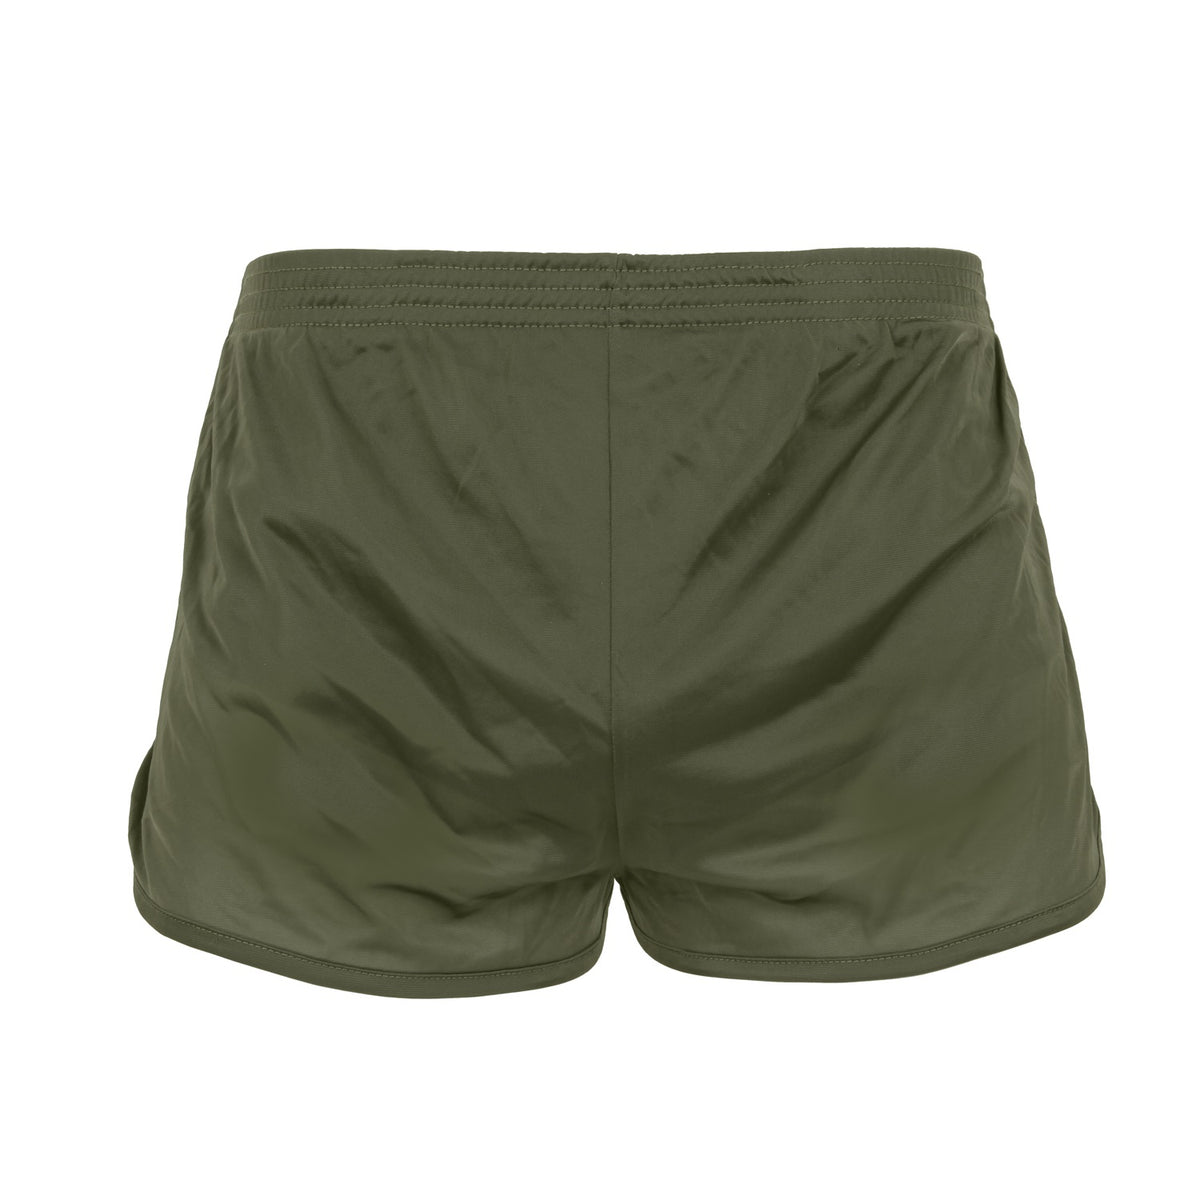 Rothco Ranger P/T (Physical Training) Shorts Olive Drab